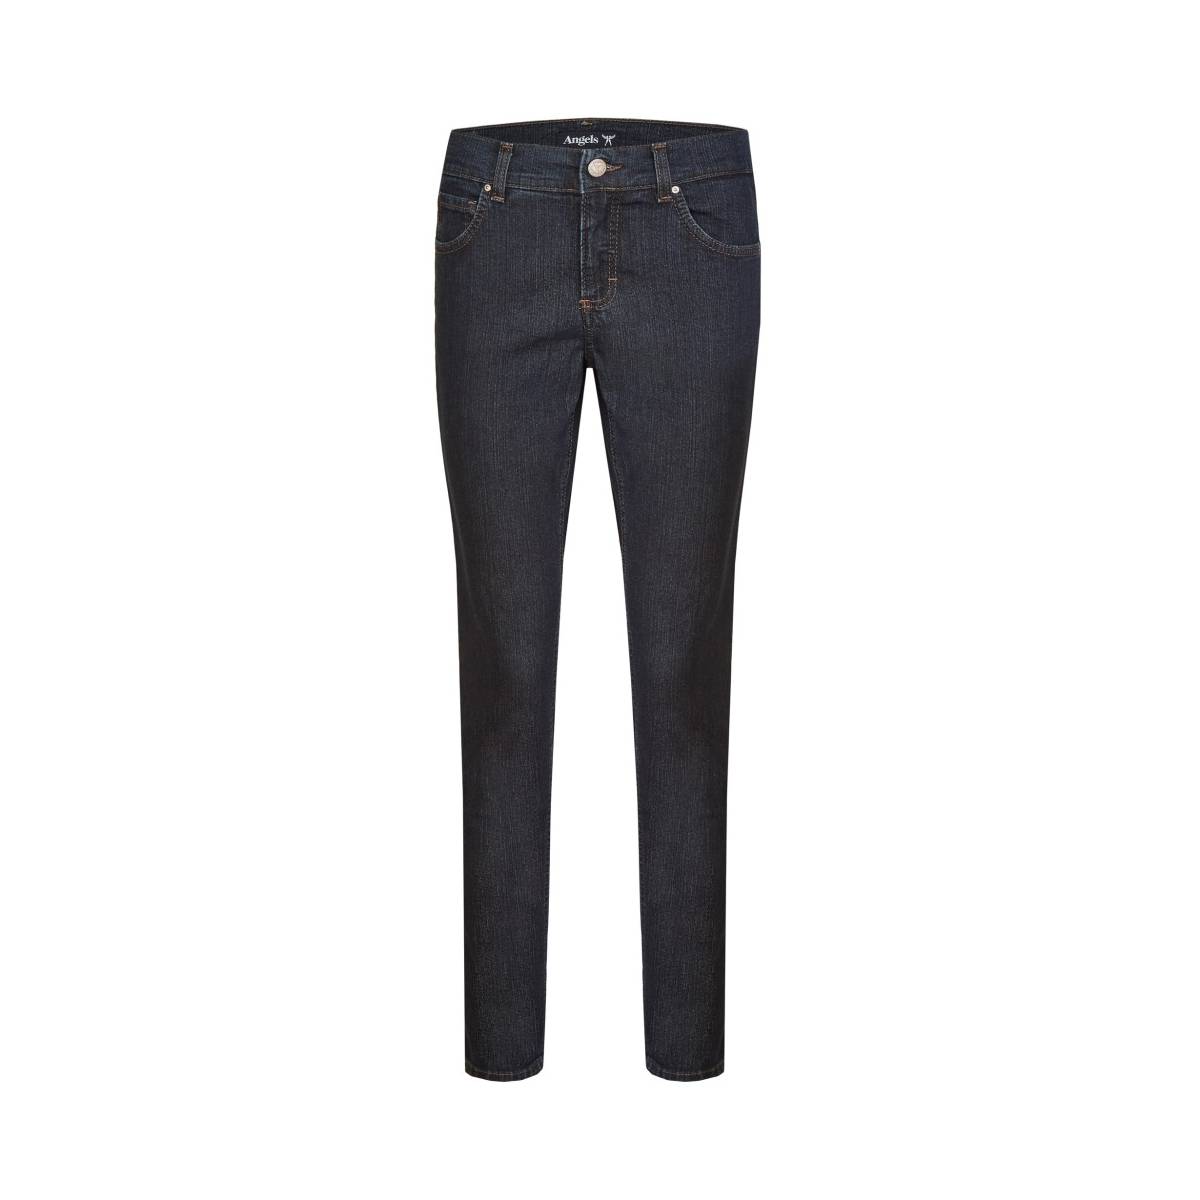 ANGELS  broeken donkere jeans -  model skinny/531232 - Dameskleding broeken jeans